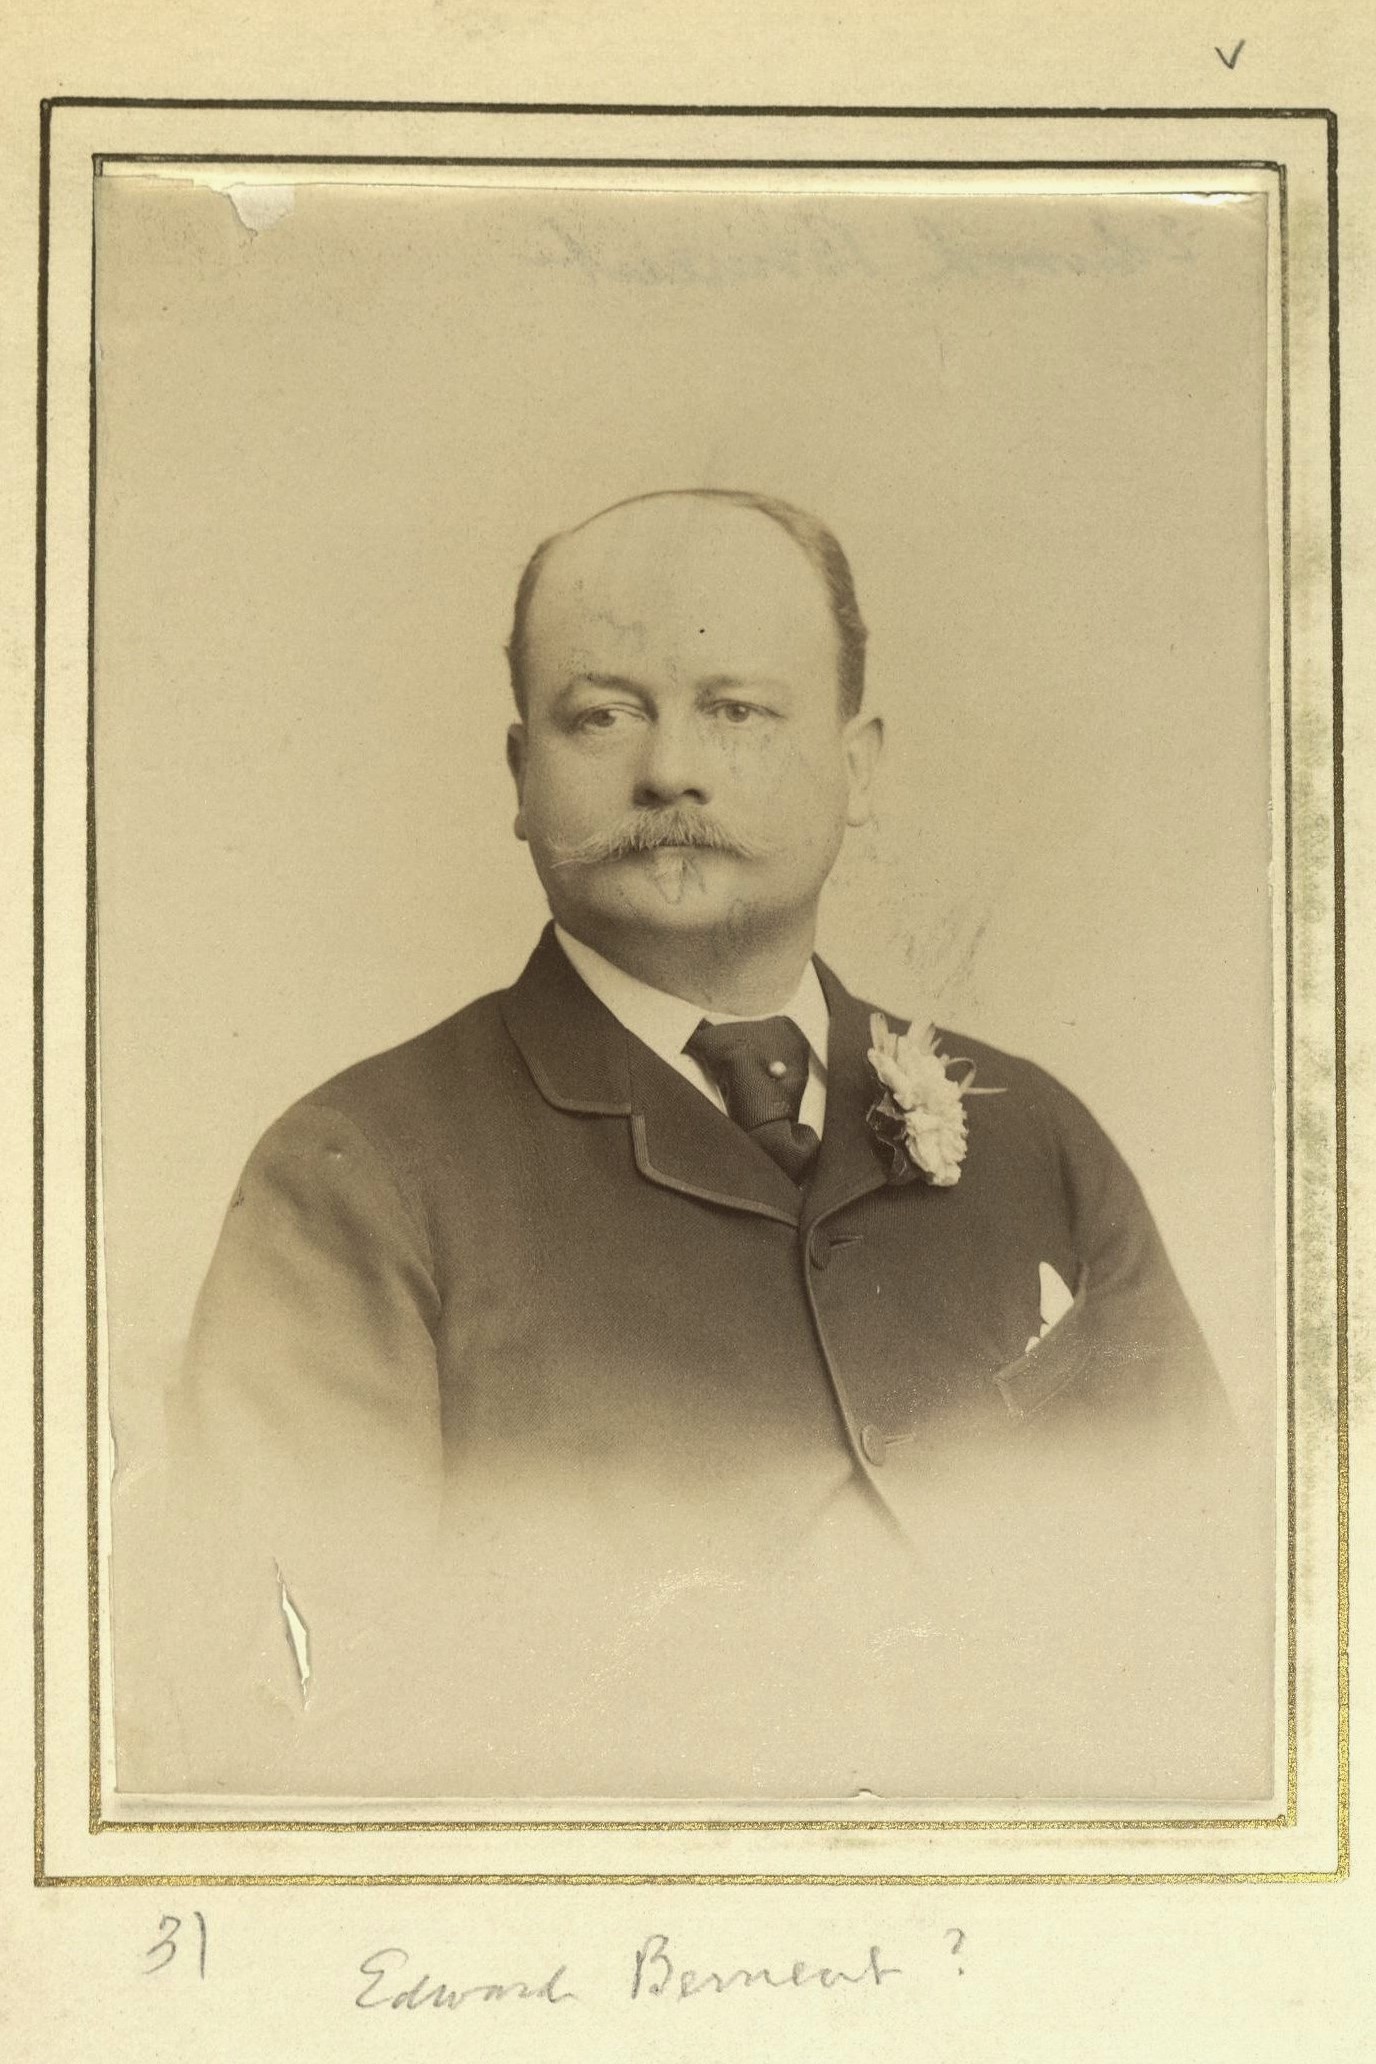 Member portrait of Edward Bement